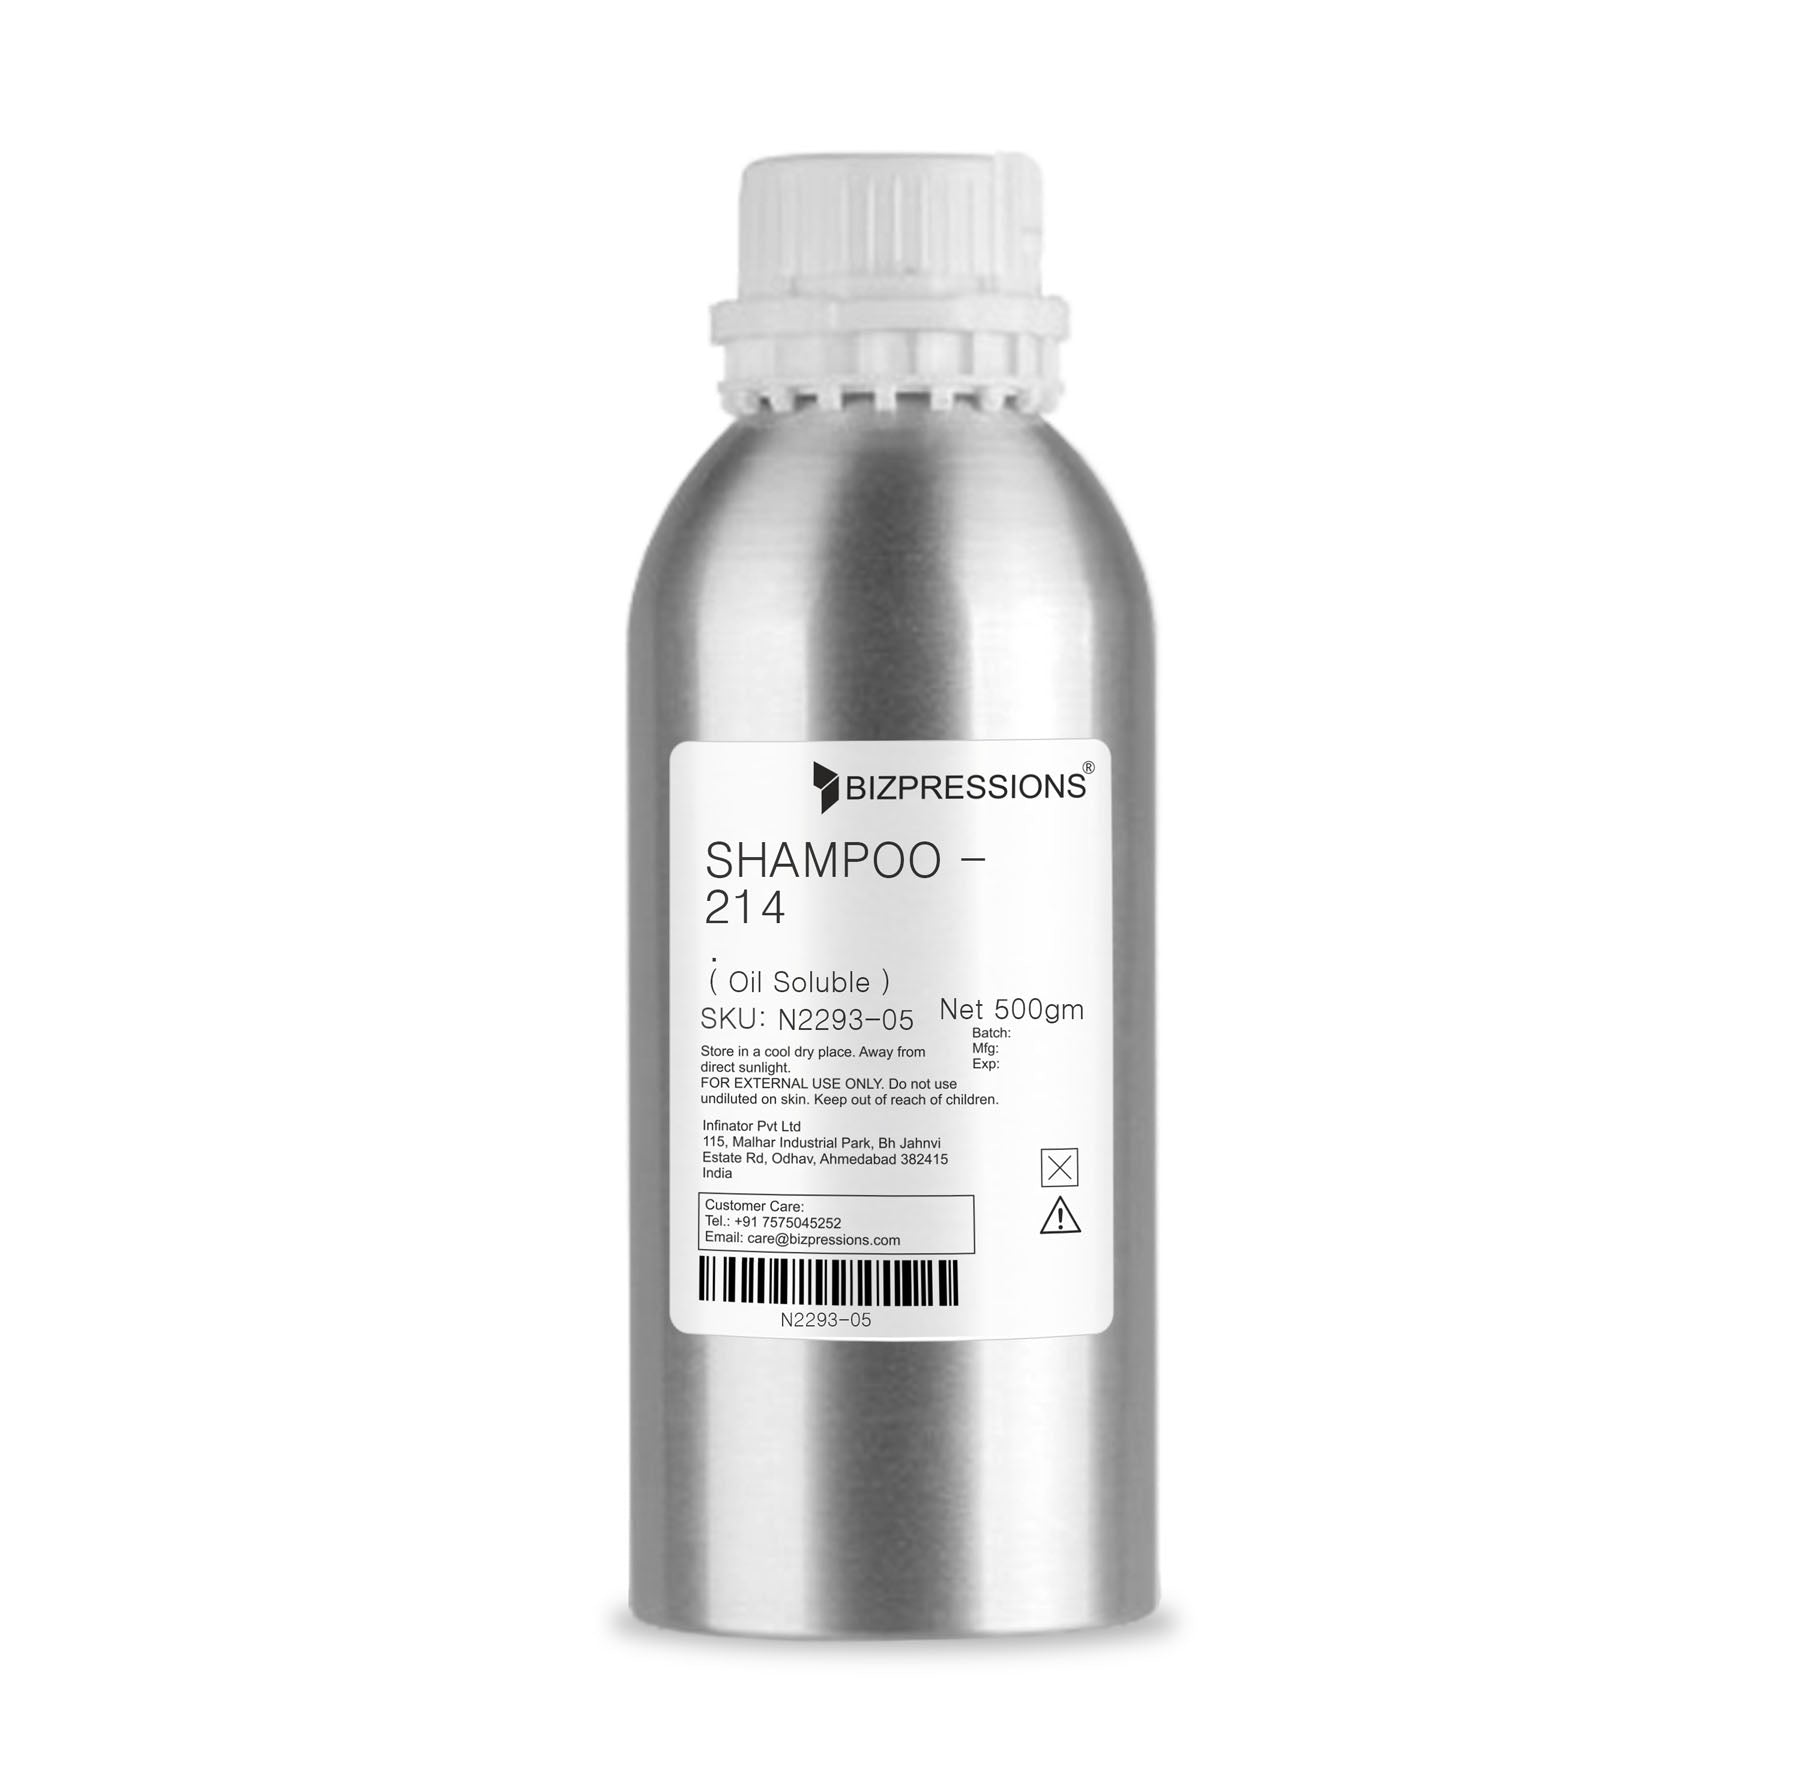 SHAMPOO - 214 - Fragrance ( Oil Soluble ) - 500 gm